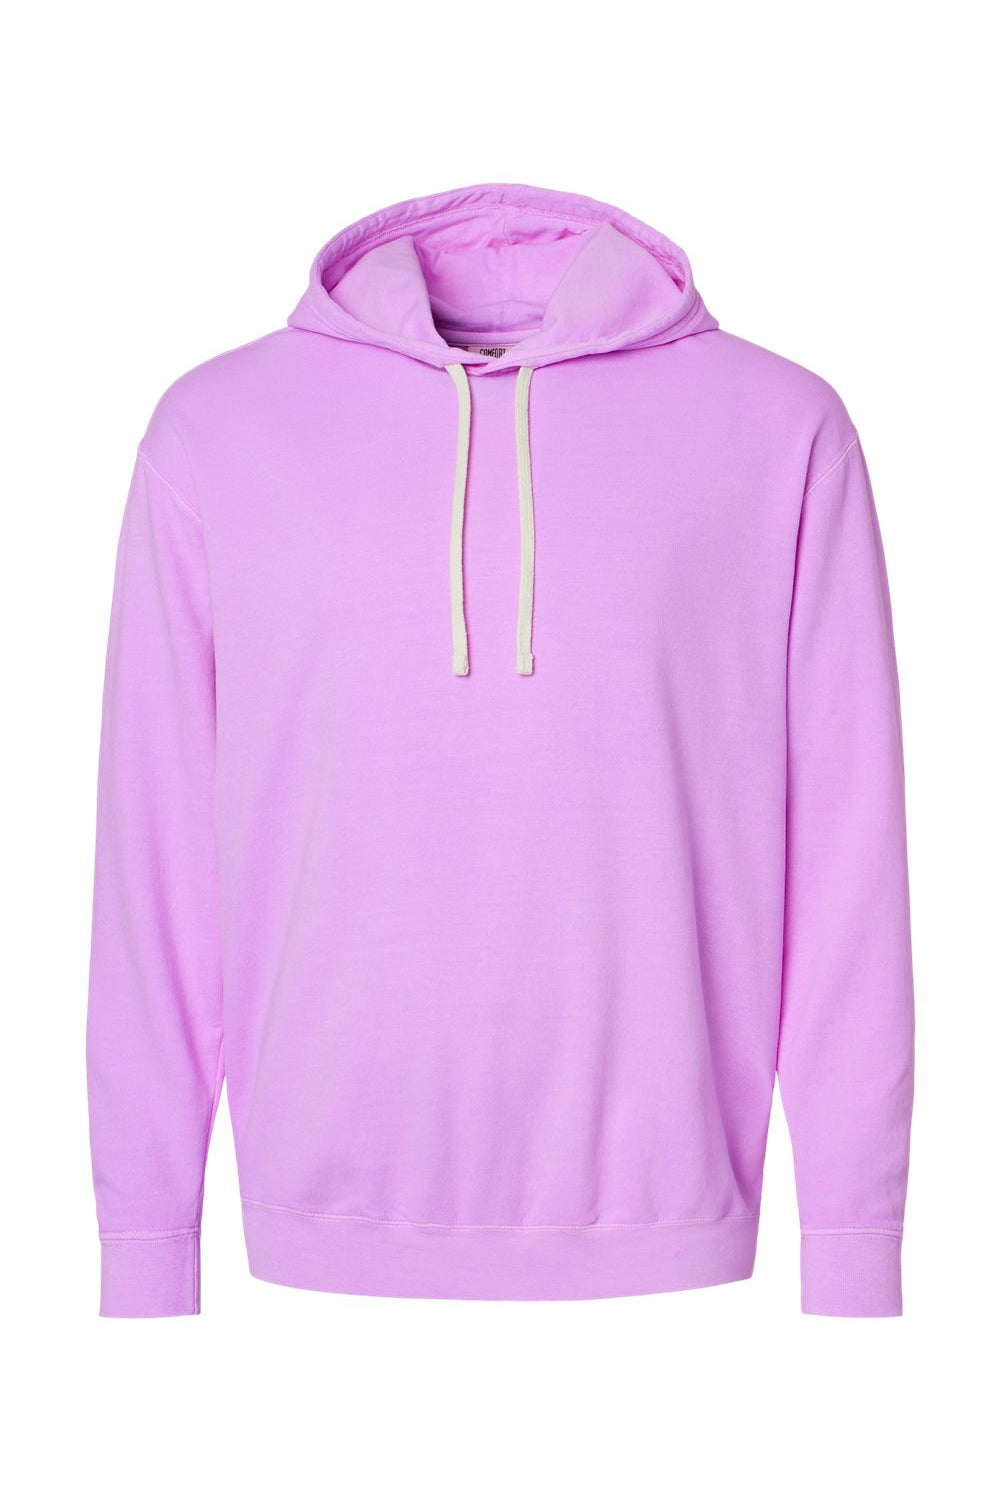 Comfort Colors 1467 Mens Garment Dyed Fleece Hooded Sweatshirt Hoodie Neon Violet Purple Flat Front